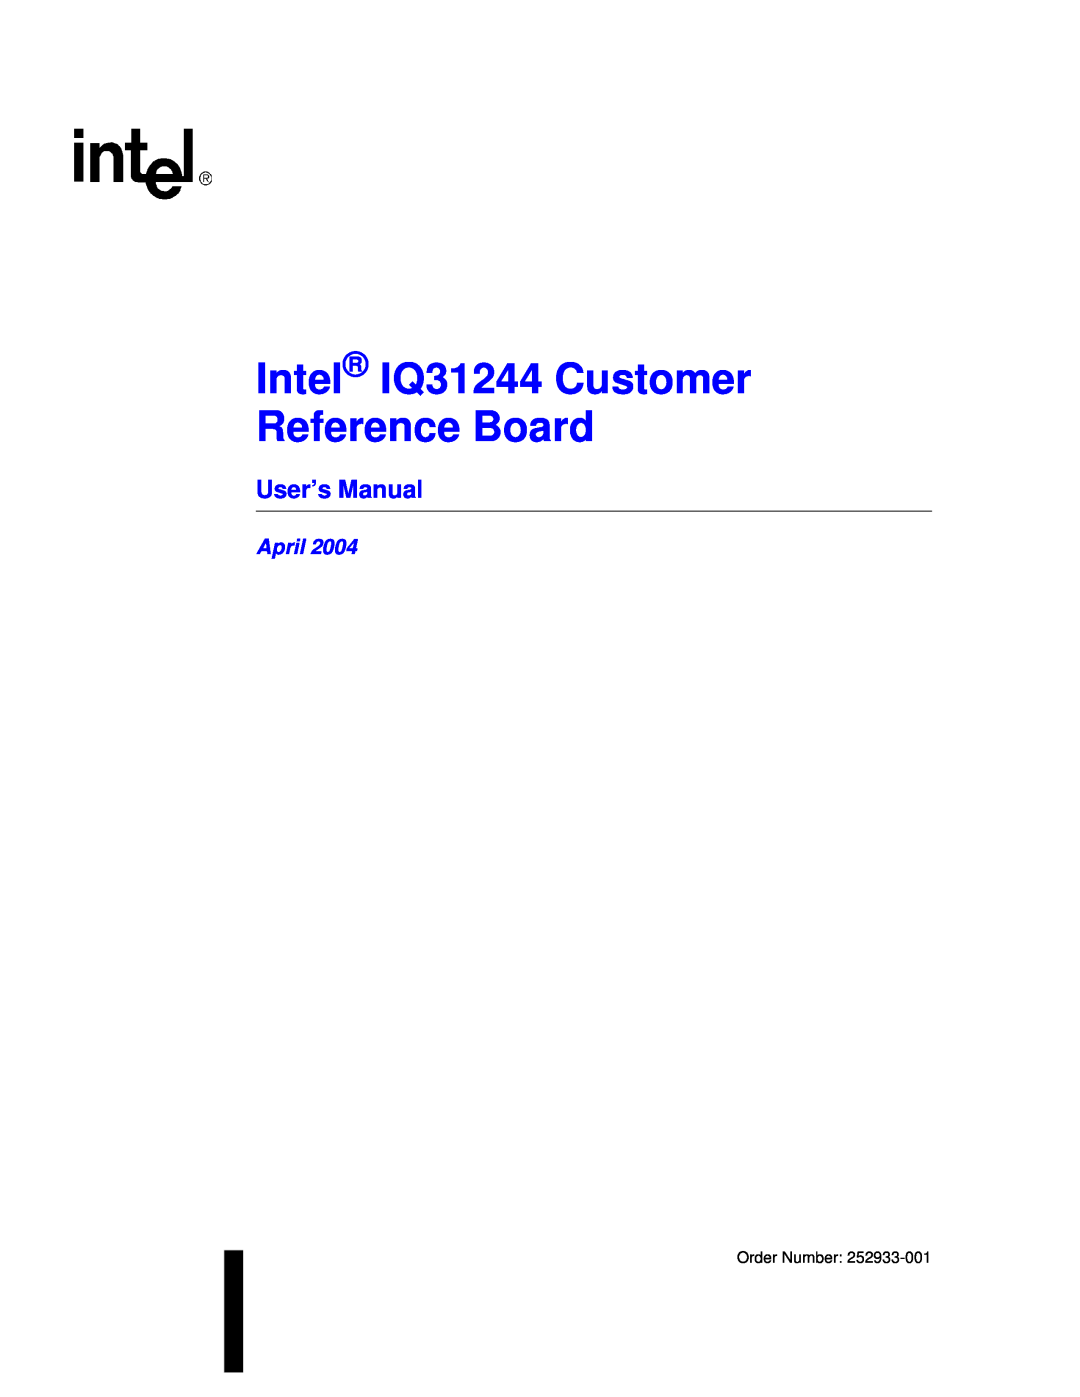 Intel user manual Intel IQ31244 Customer Reference Board, April 